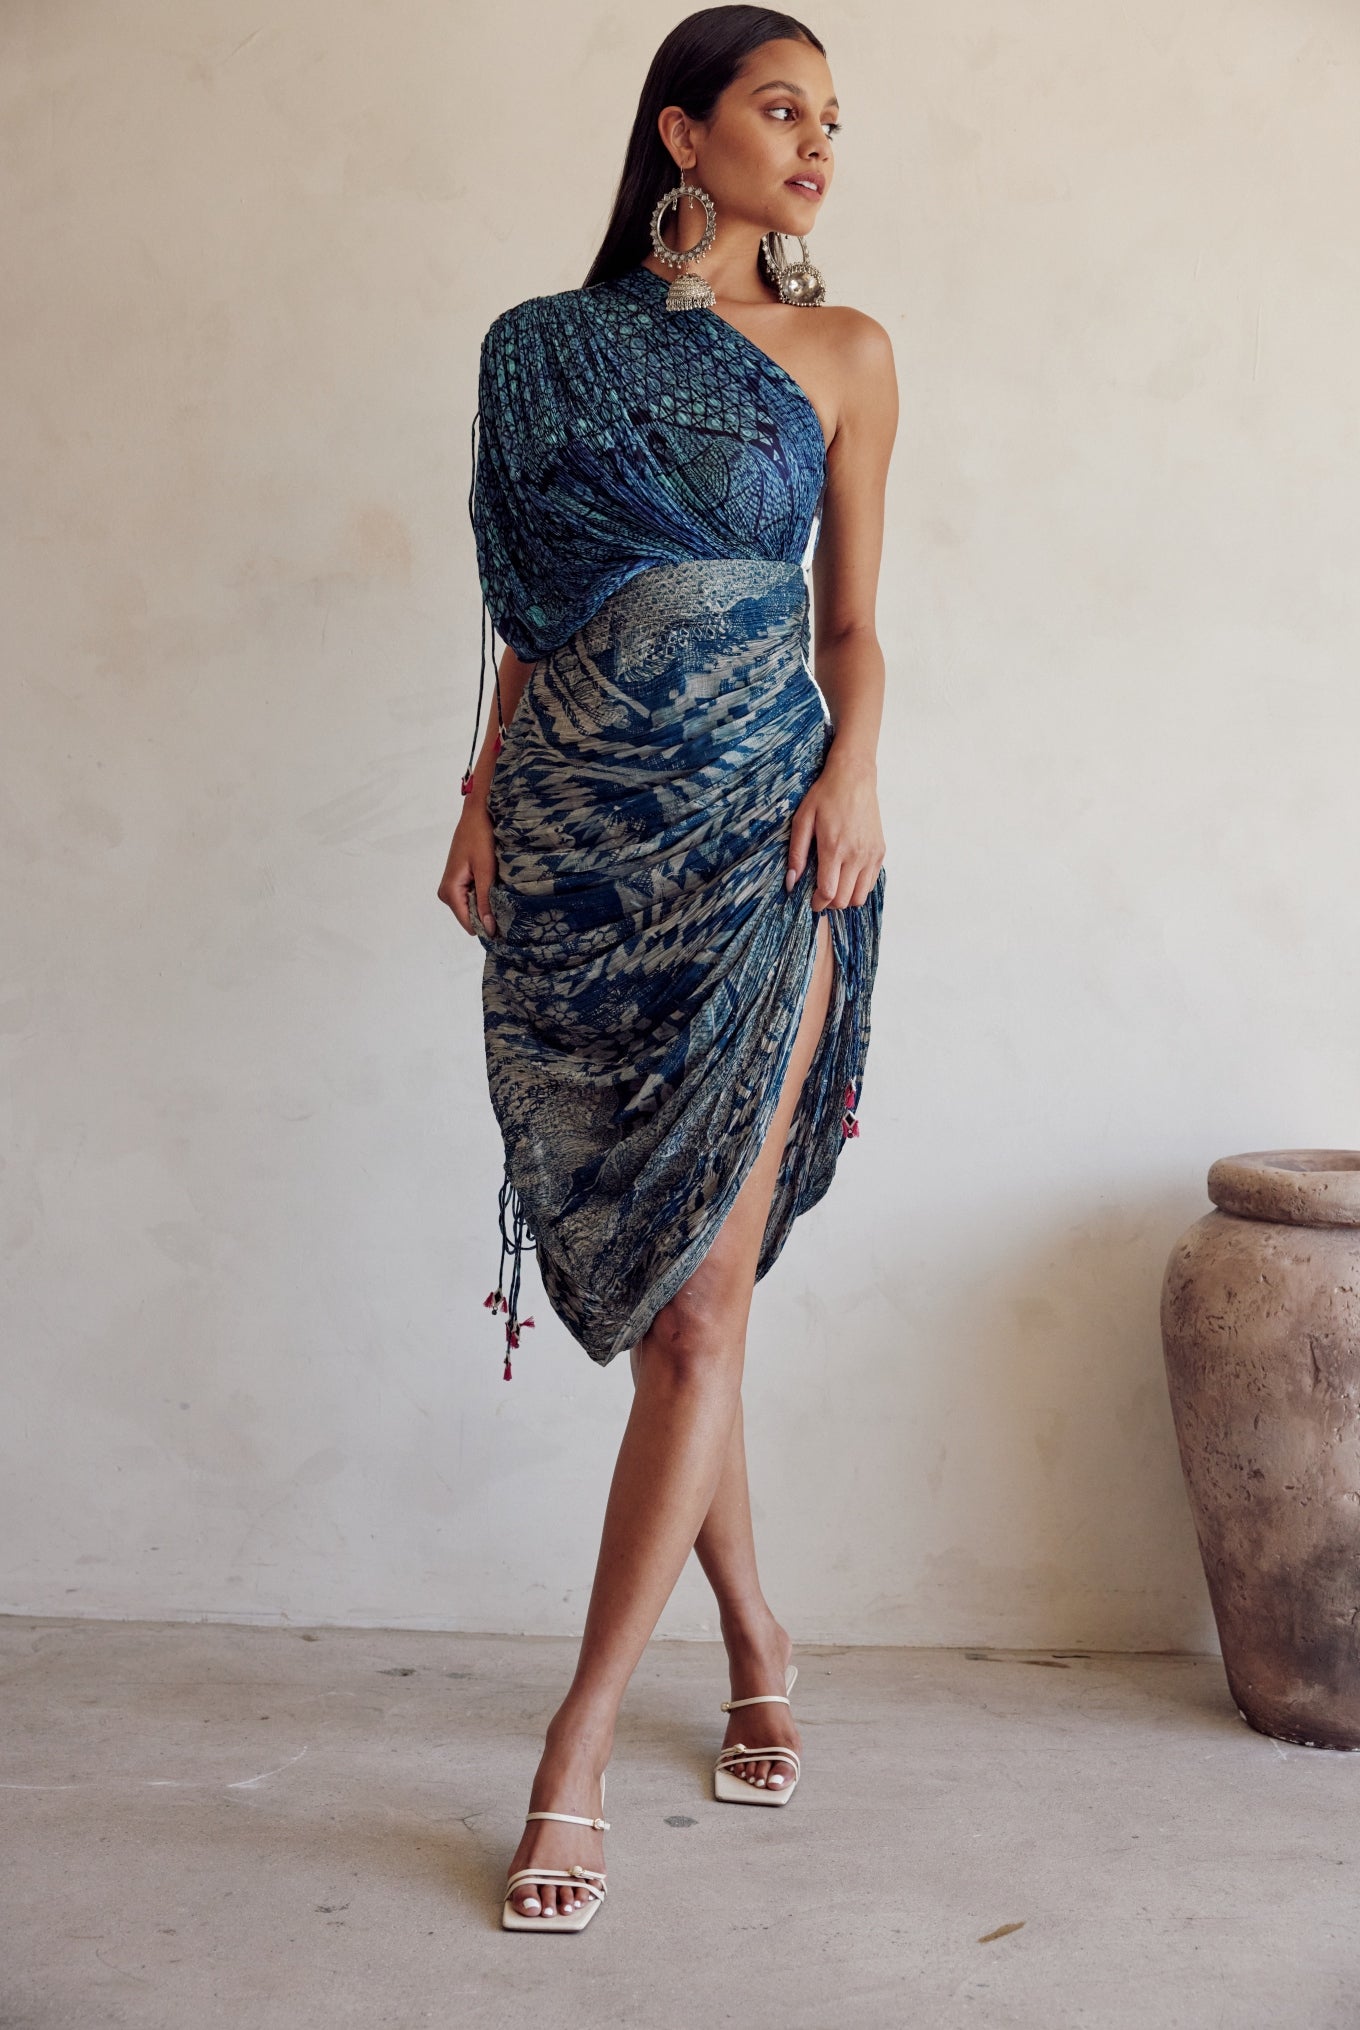 Megara Inspired Sari Dress by luvmizuki on DeviantArt